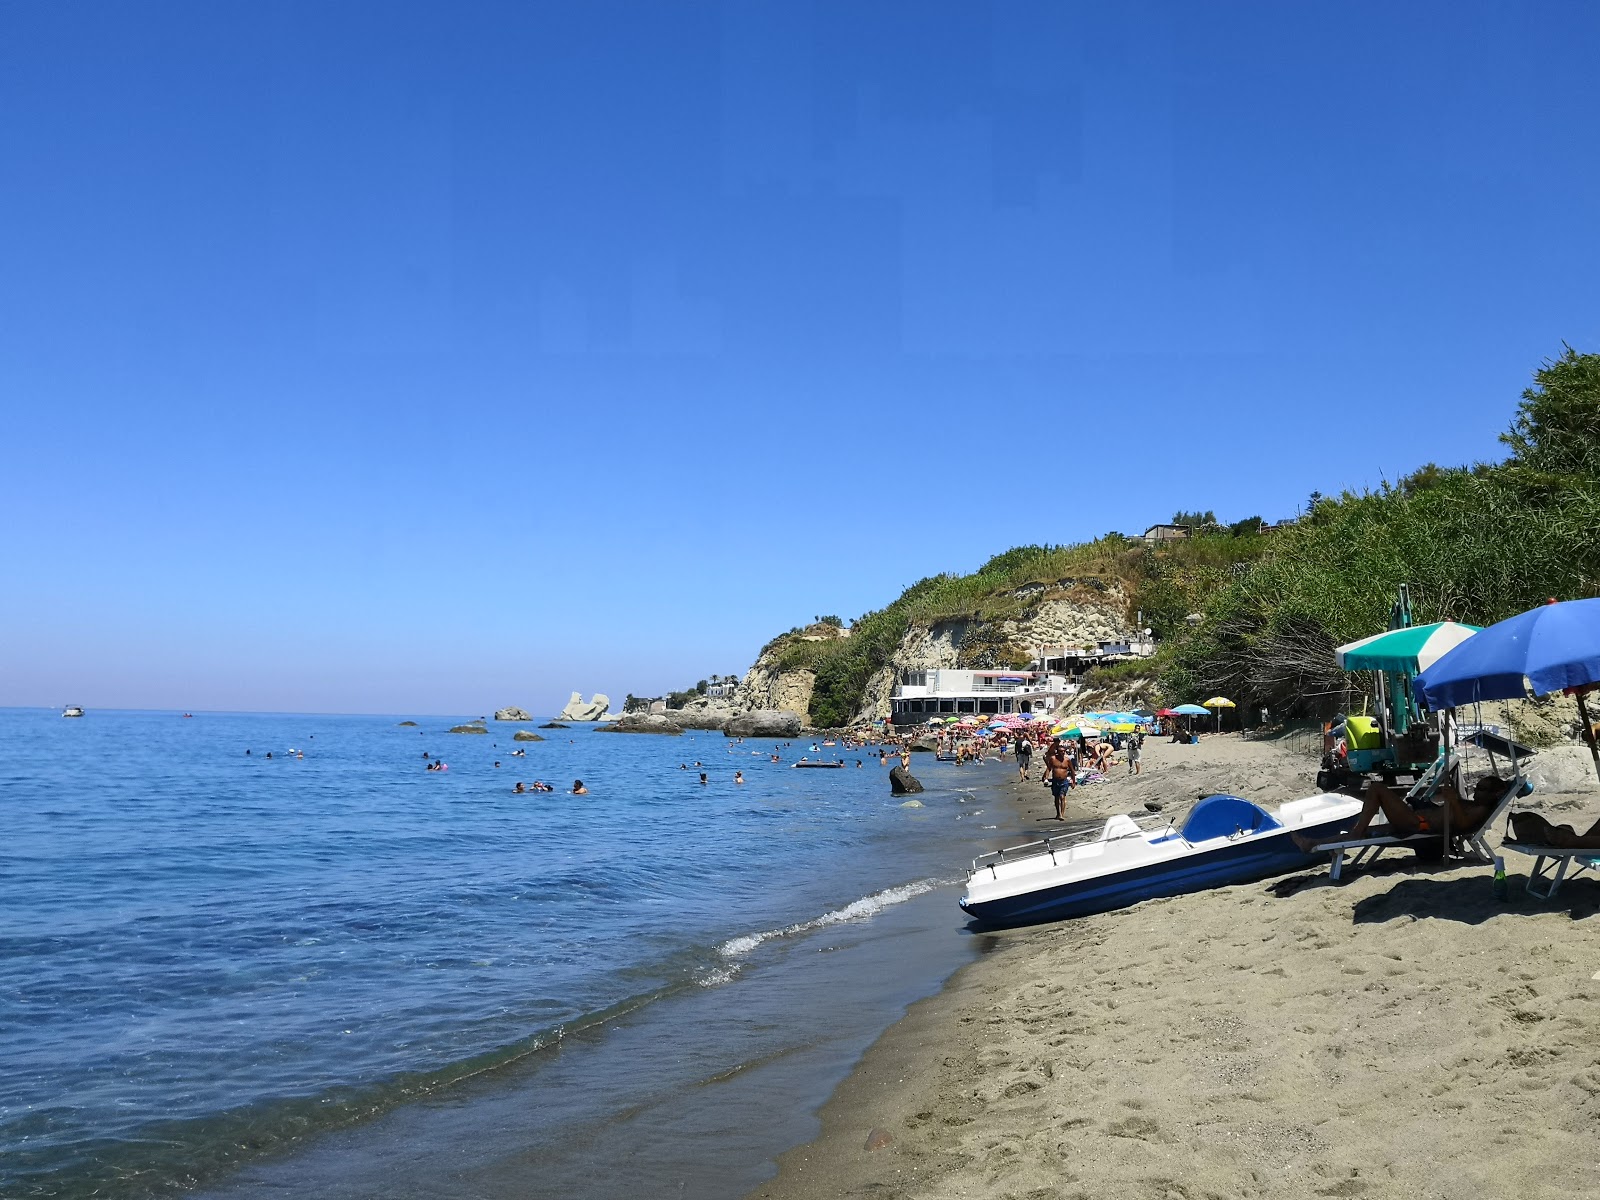 Foto van Spiaggia Cava Dell'Isola met ruime baai